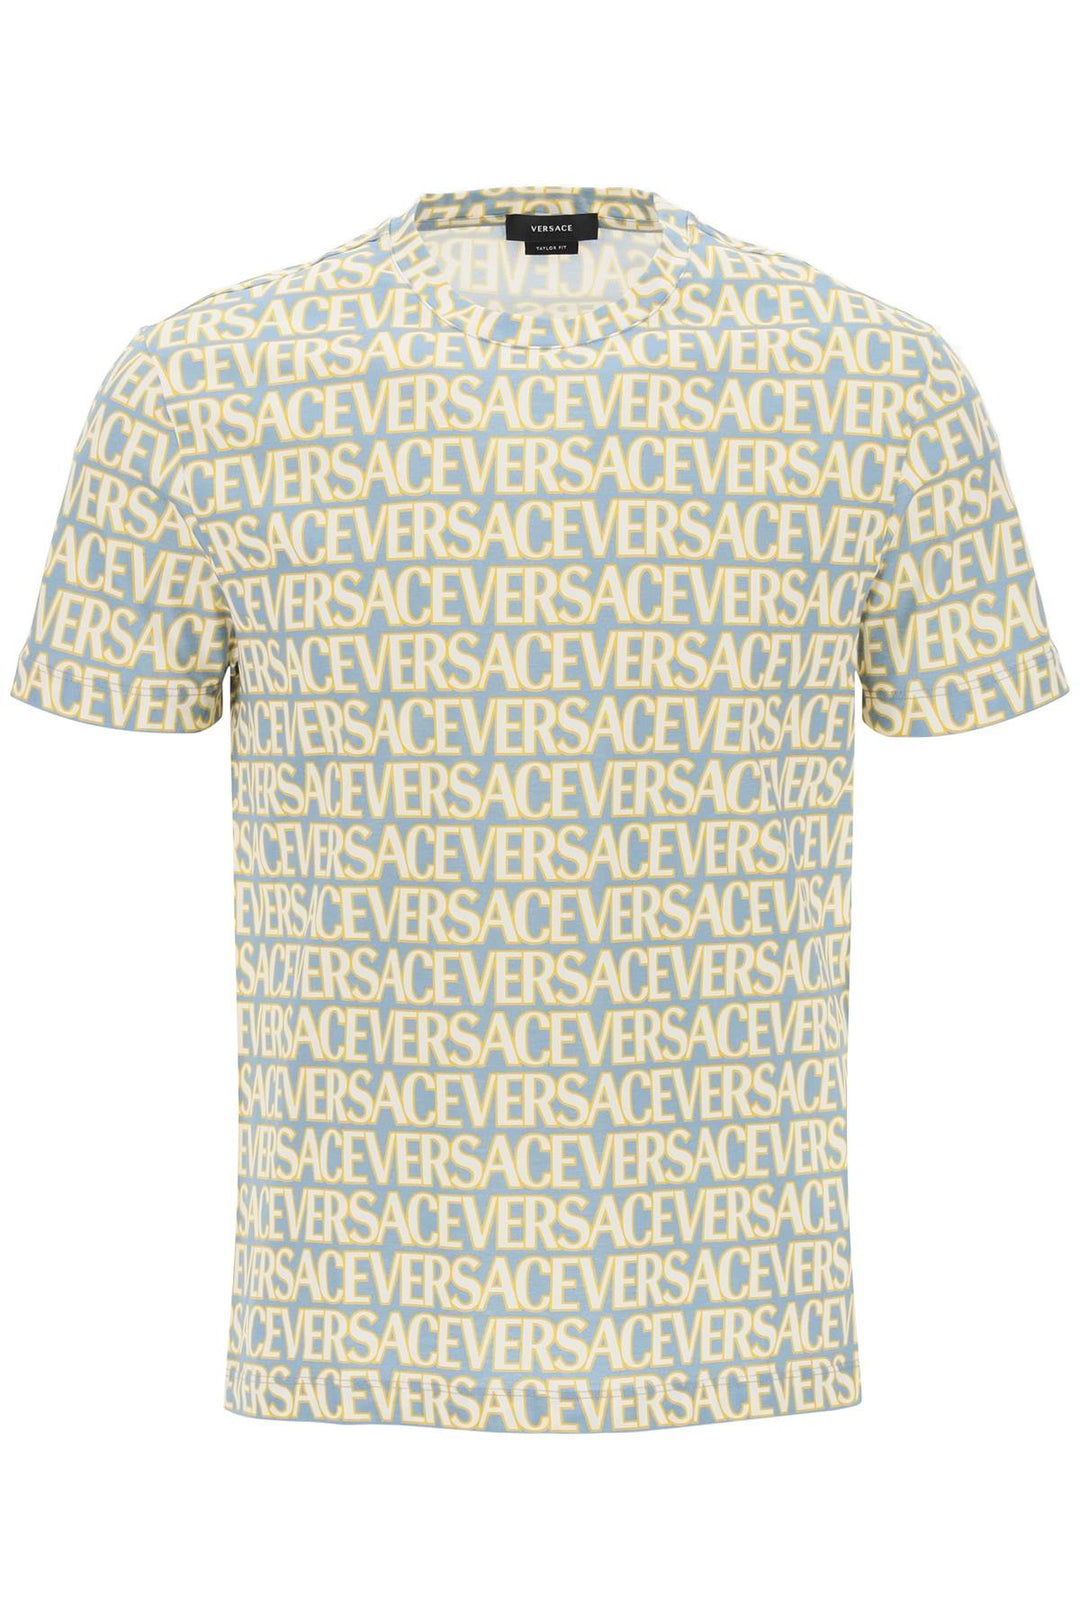 Versace Allover T Shirt   Celeste